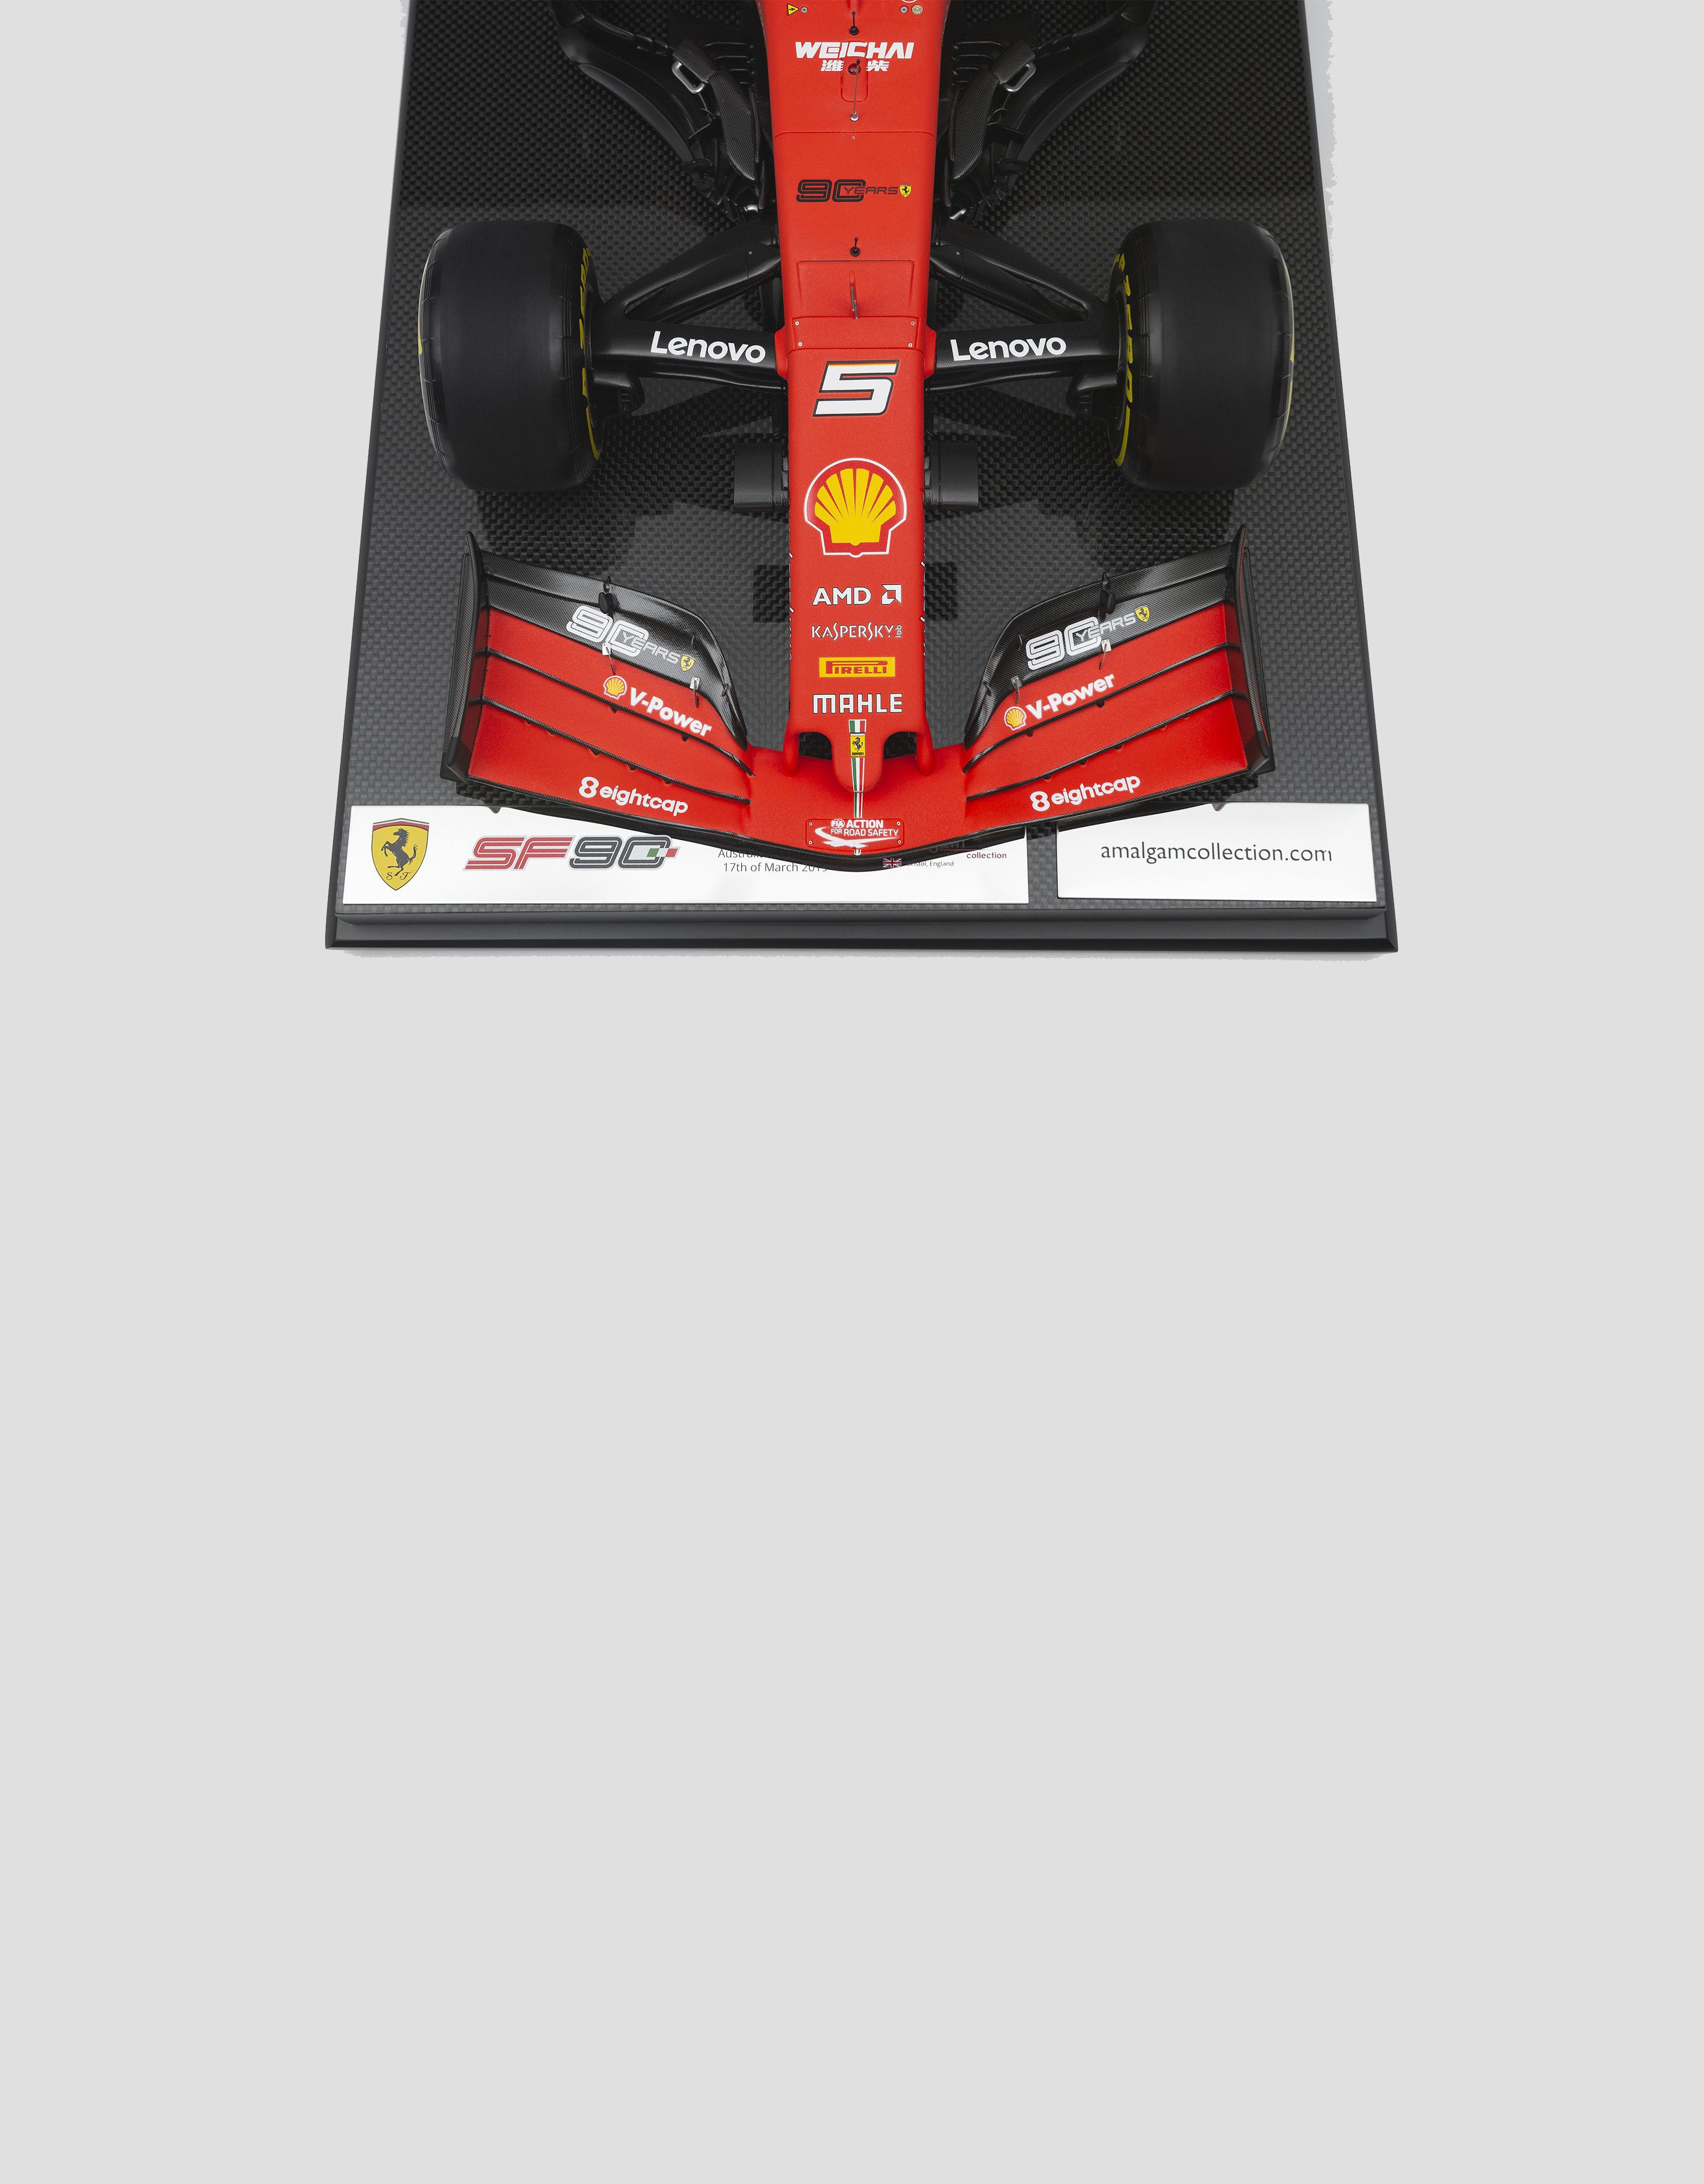 Ferrari 法拉利 SF90 Vettel 1:8 比例汽车模型 红色 L7981f